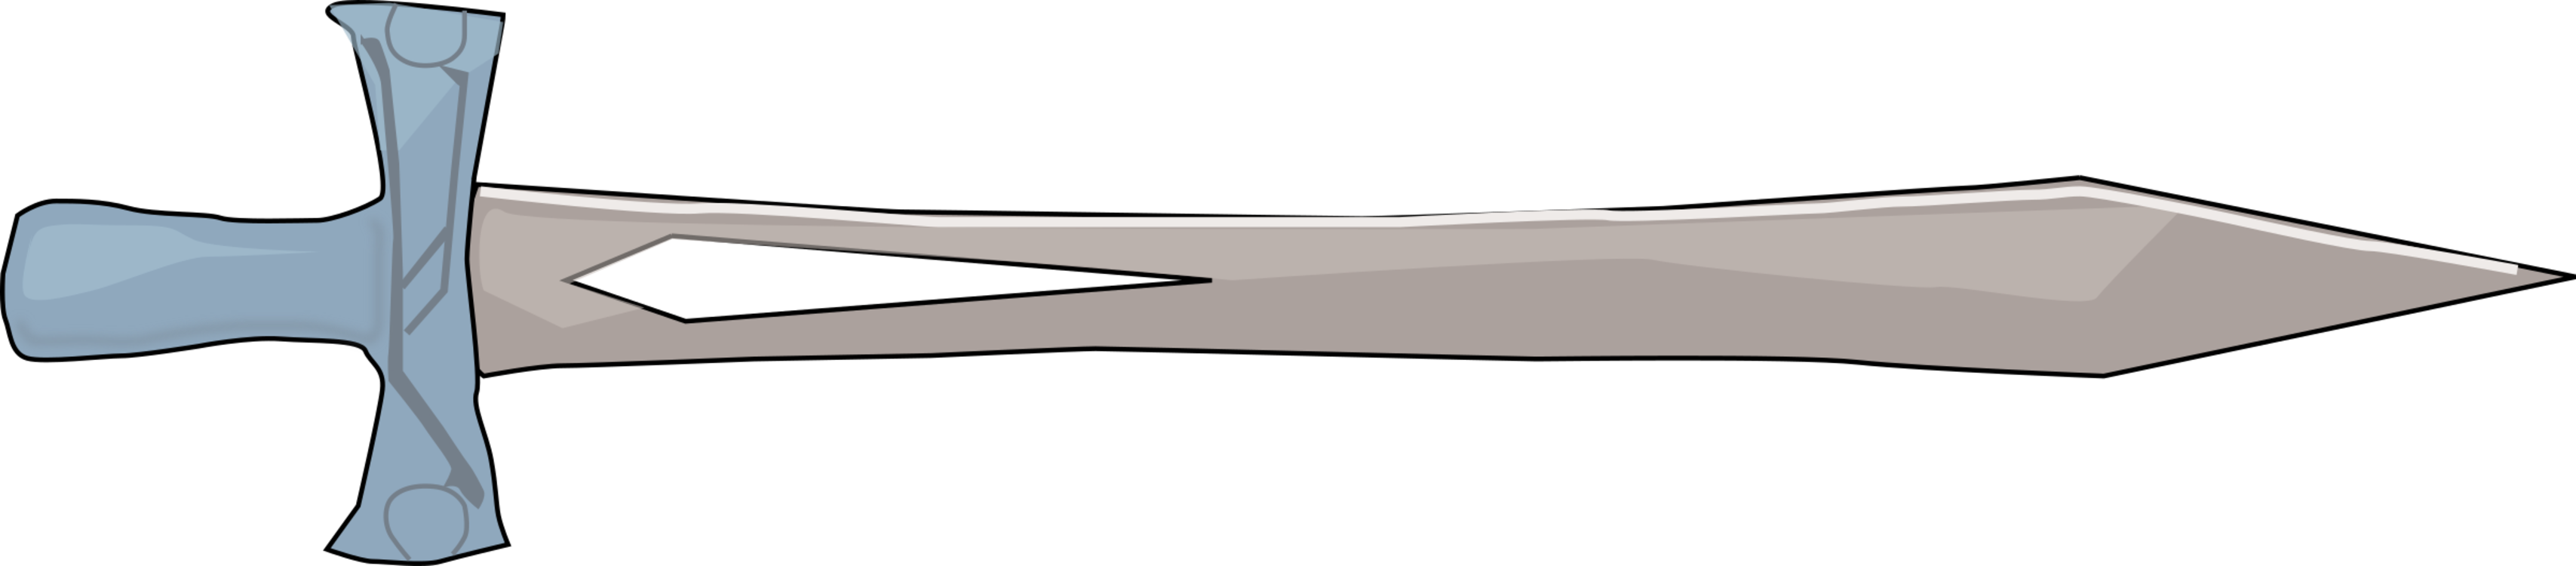 Automotive Exterior,Sword,Weapon